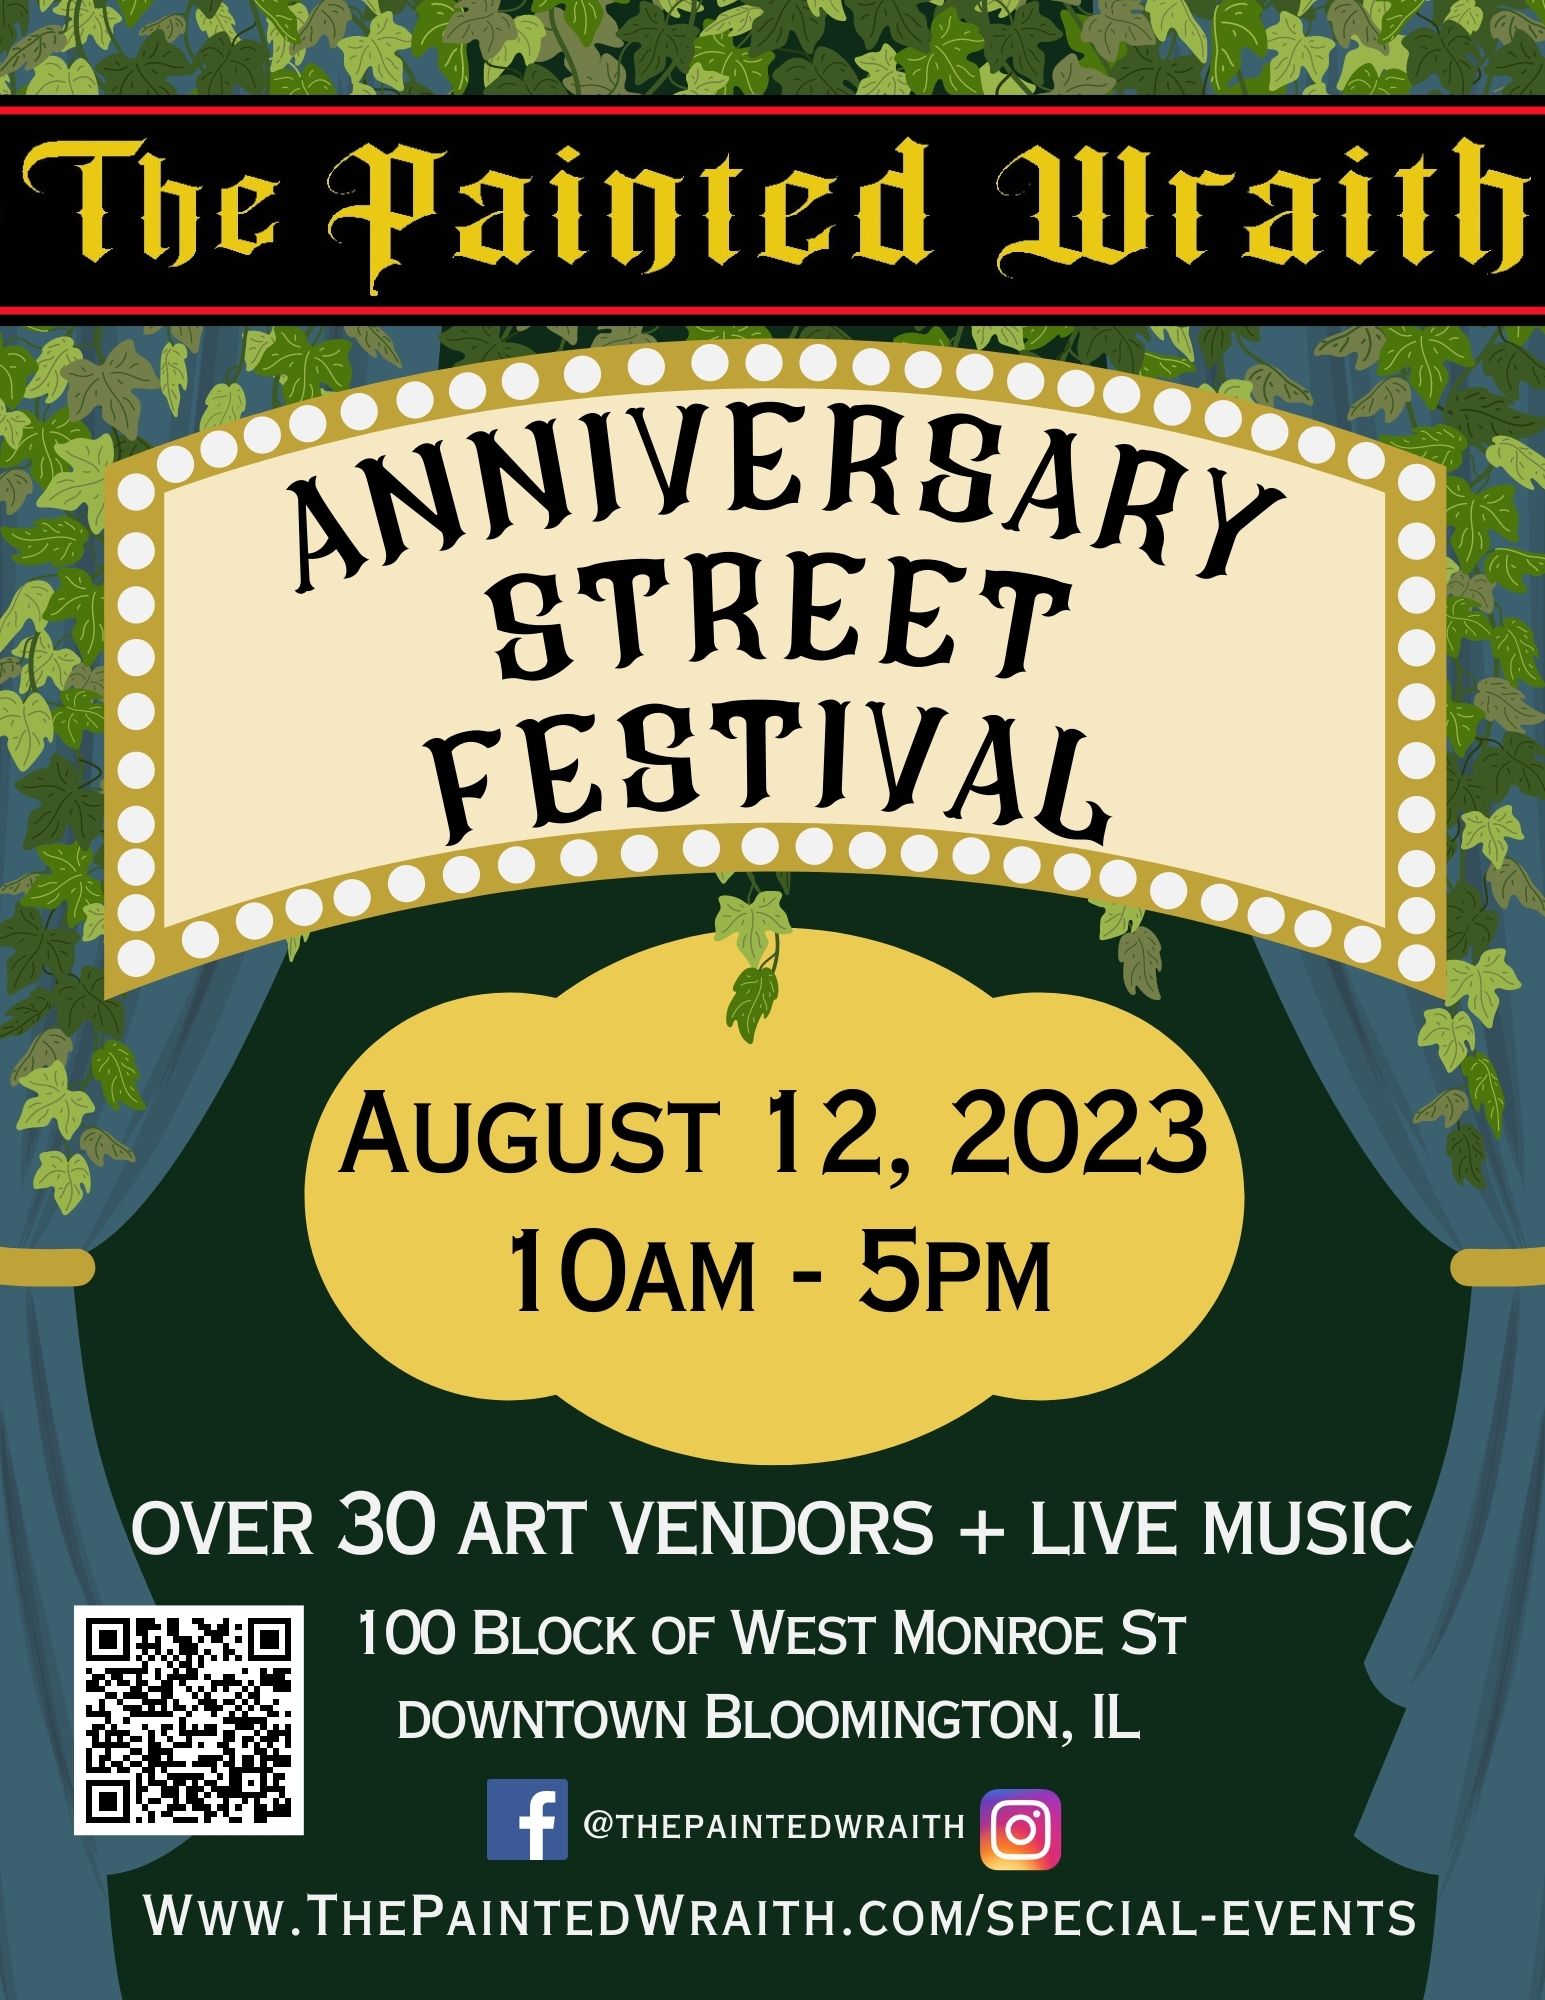 Painted Wraith Anniversary Street Festival